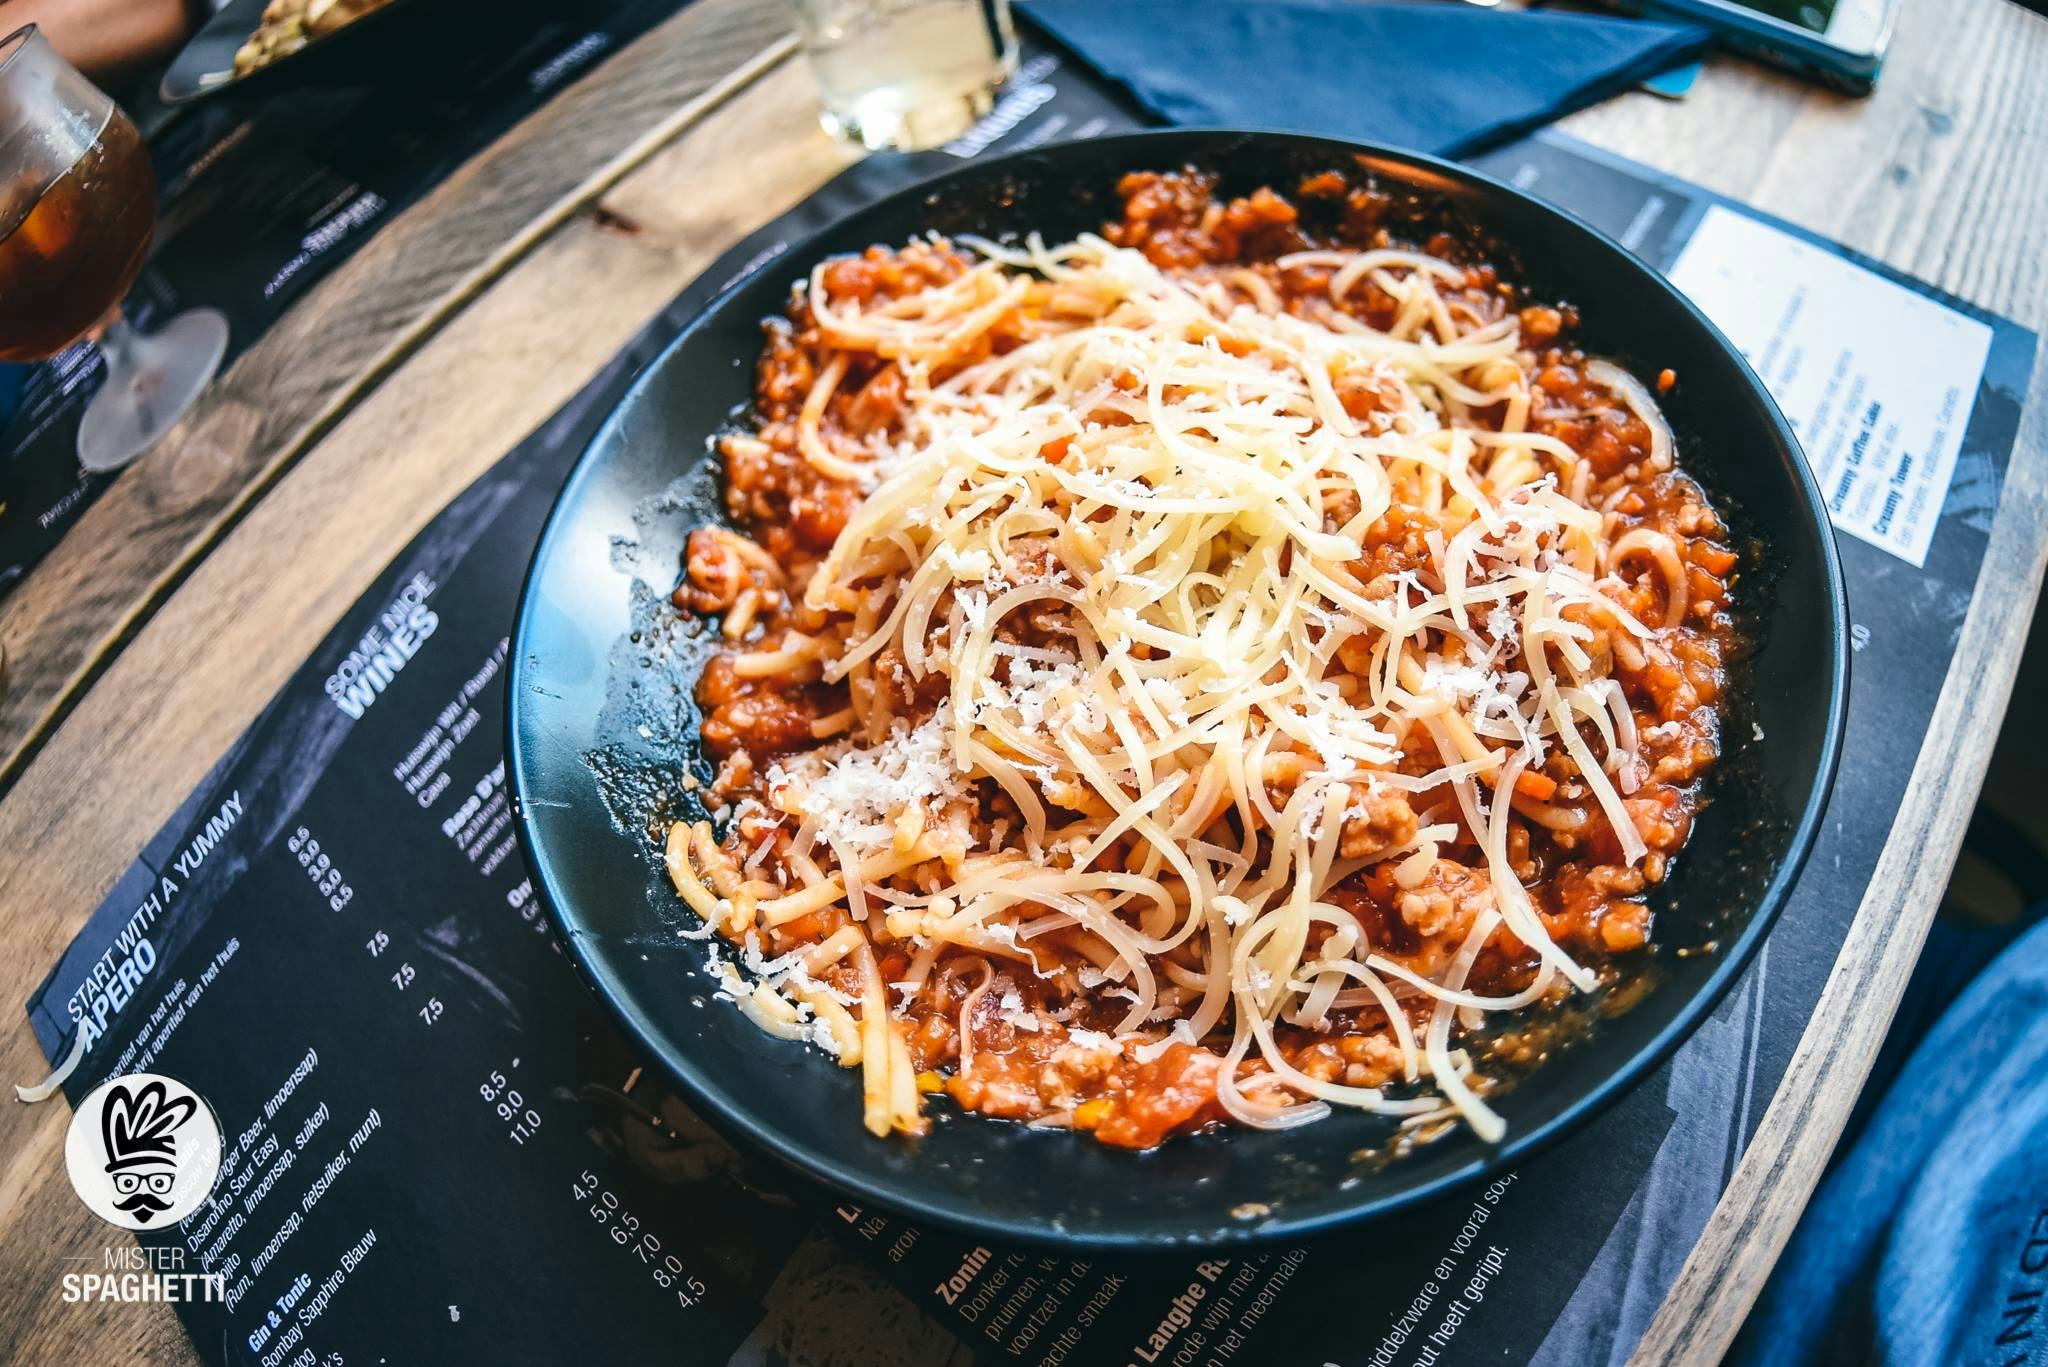 'Mister Spaghetti' wil in Nederland binnen tien jaar dertig restaurants openen